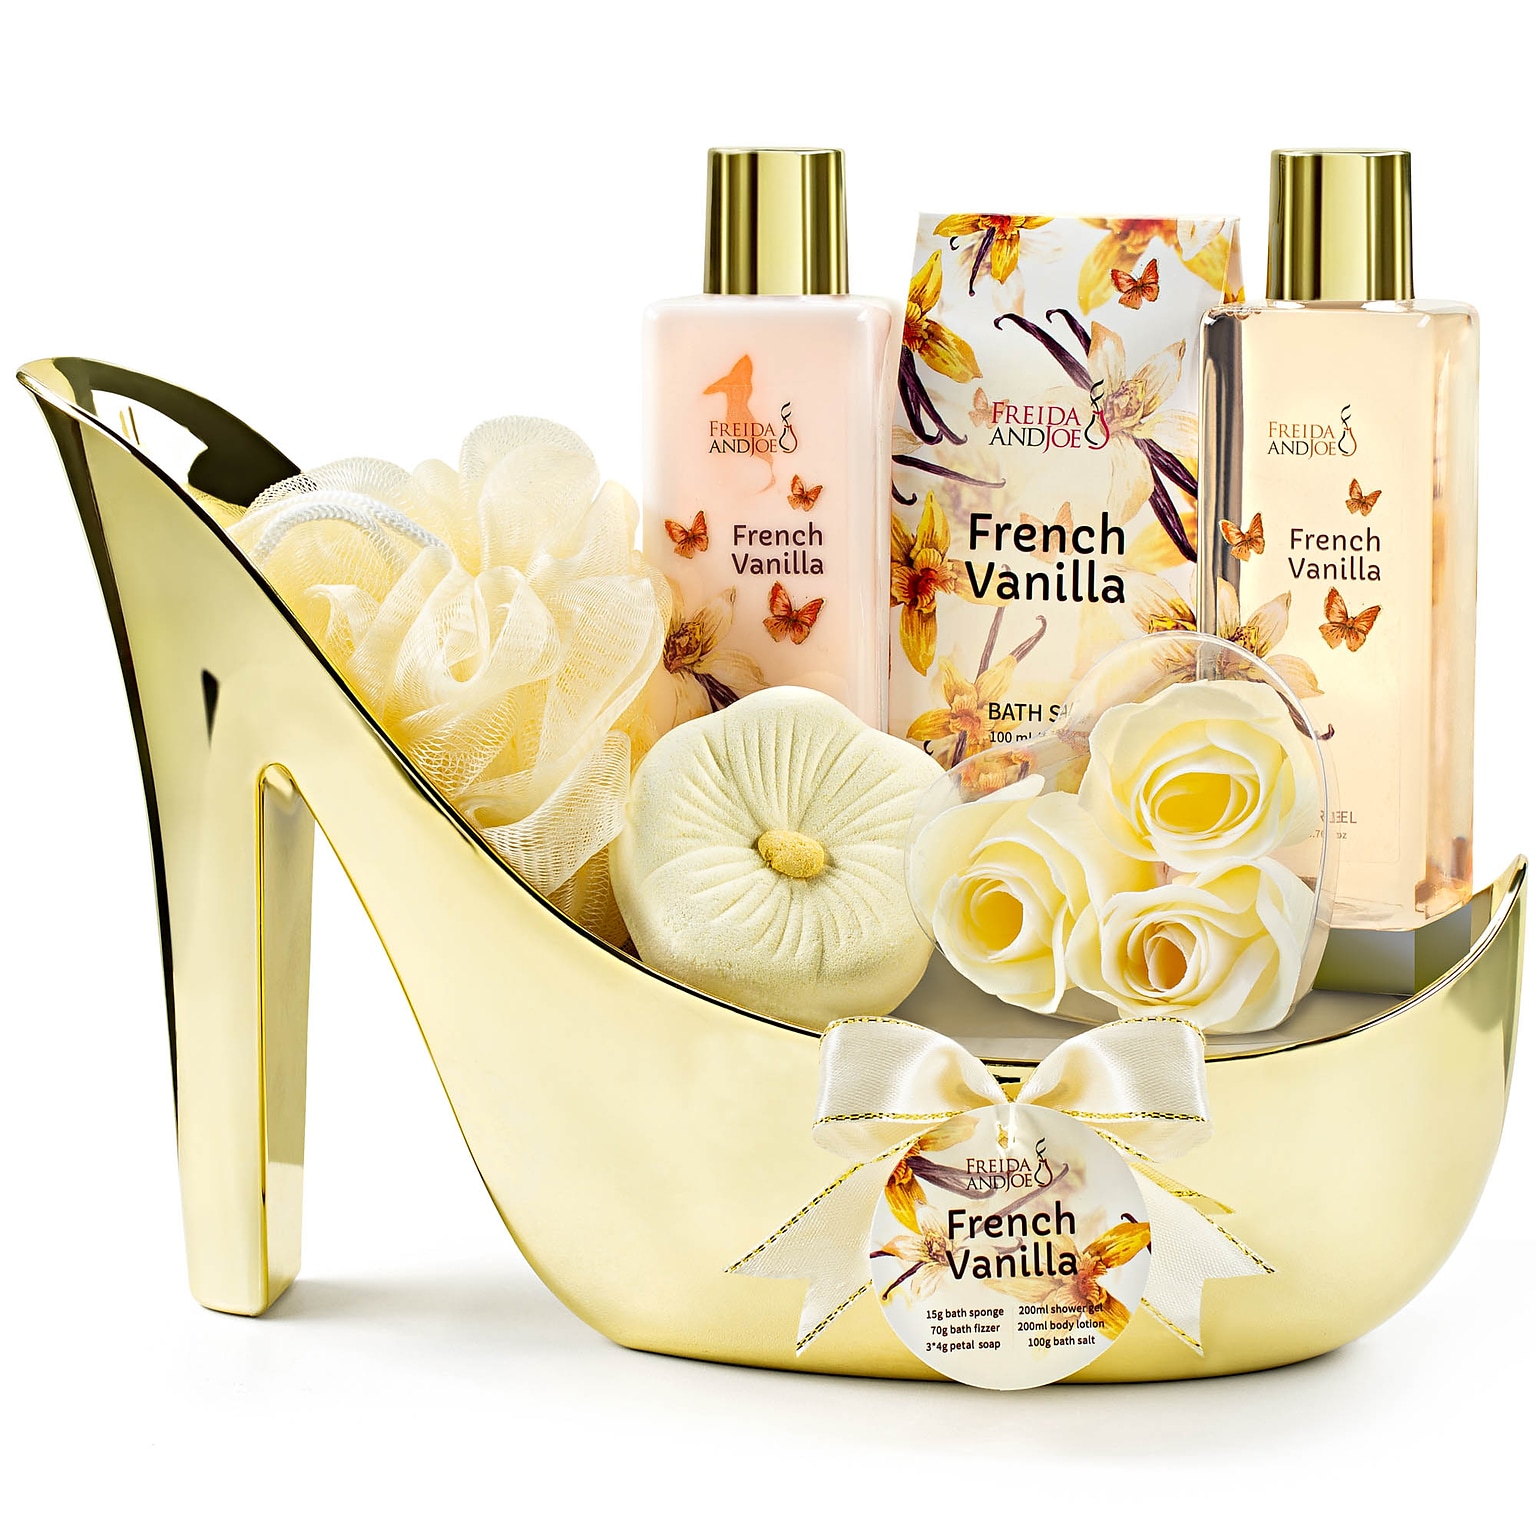 Freida and Joe Elegant French Vanilla Spa Set Gold Luxurious High Heel Shoe (FJ-182)